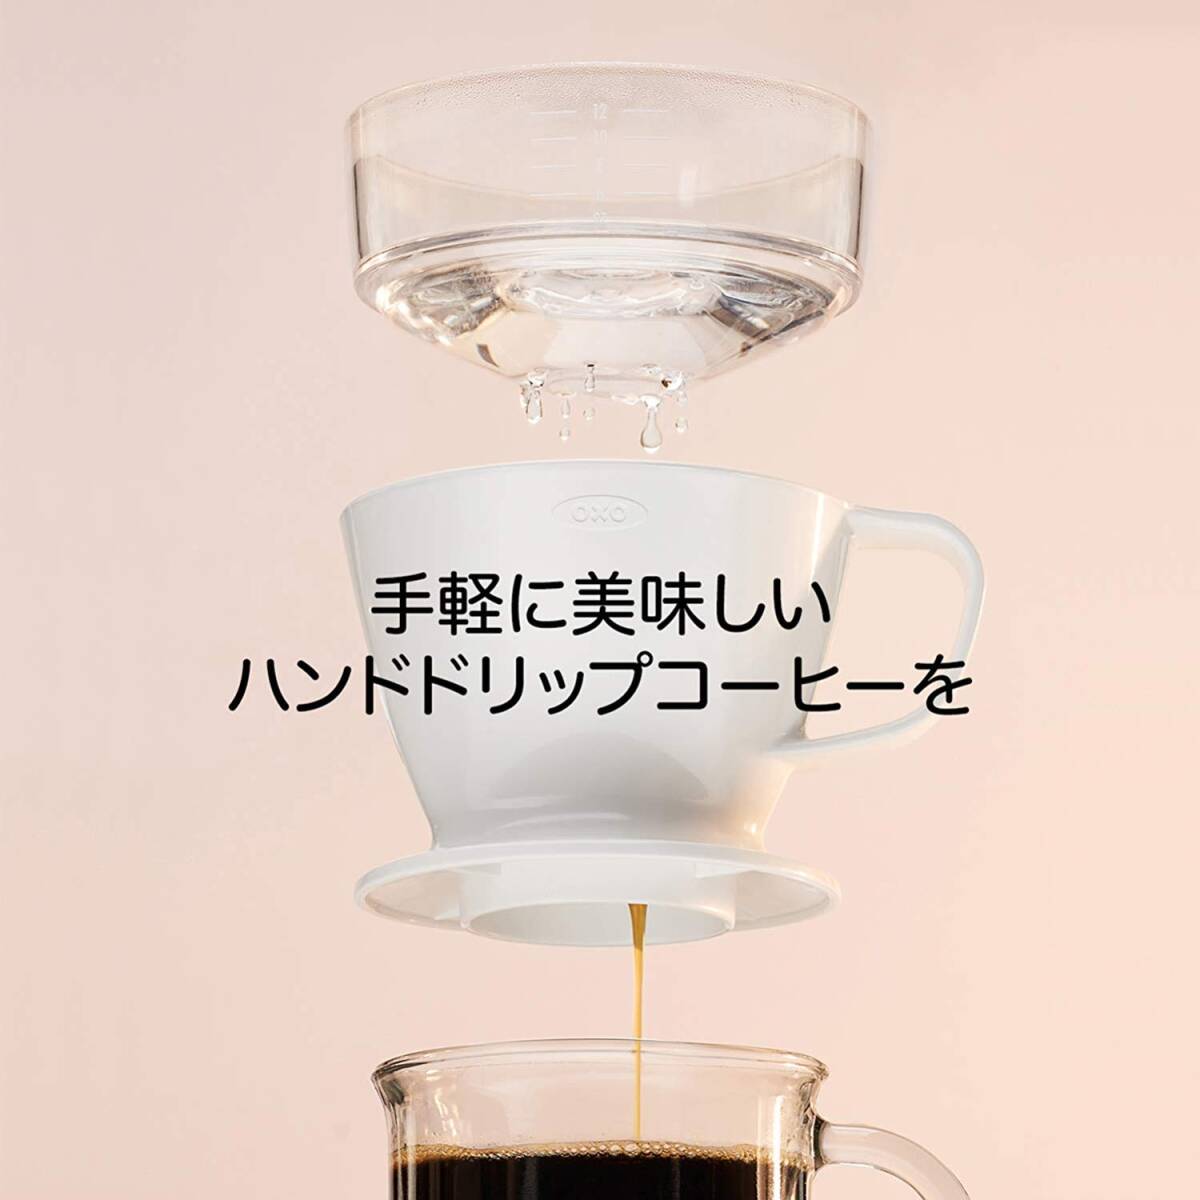 OXO コーヒー ドリッパー 湯量?自動でドリップスピード調整 オートドリップ コーヒーメーカー 1~2杯 360ml チャコールグレー_画像4